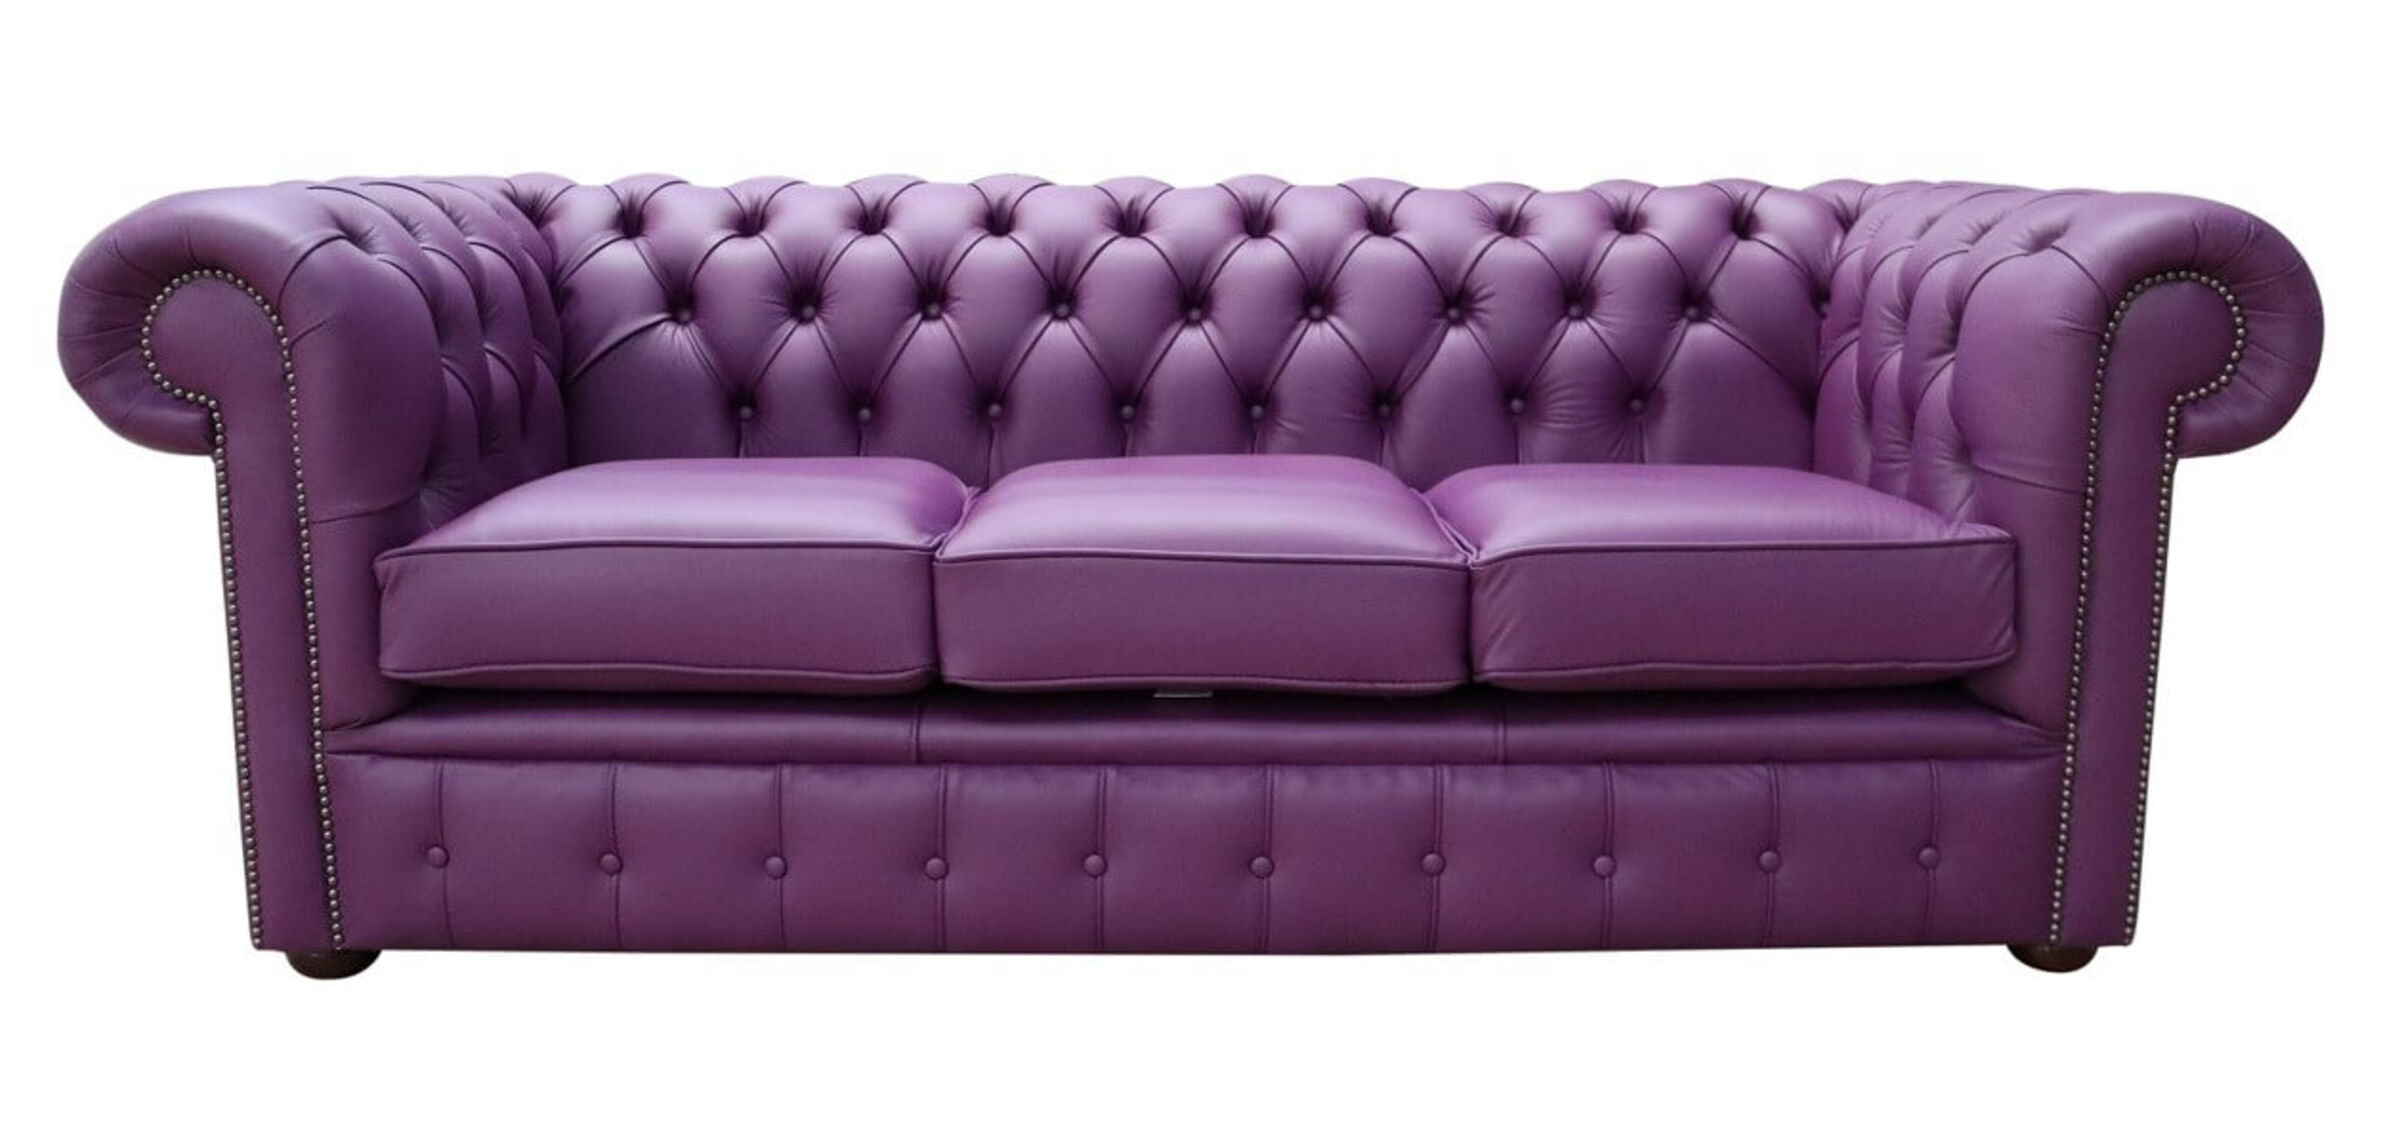 purple leather sofa set